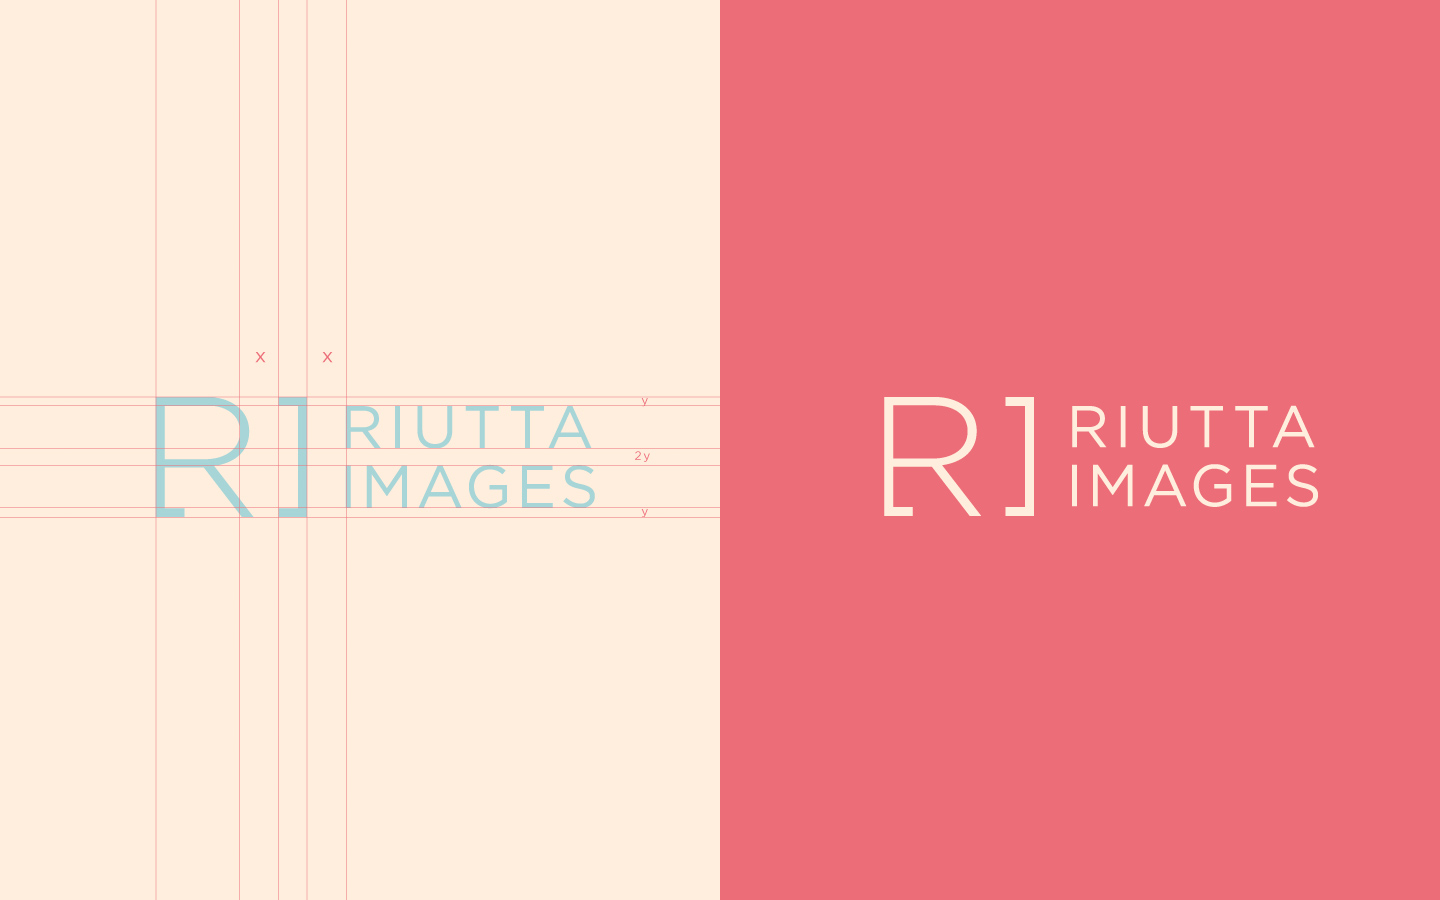 Riutta_images_application9